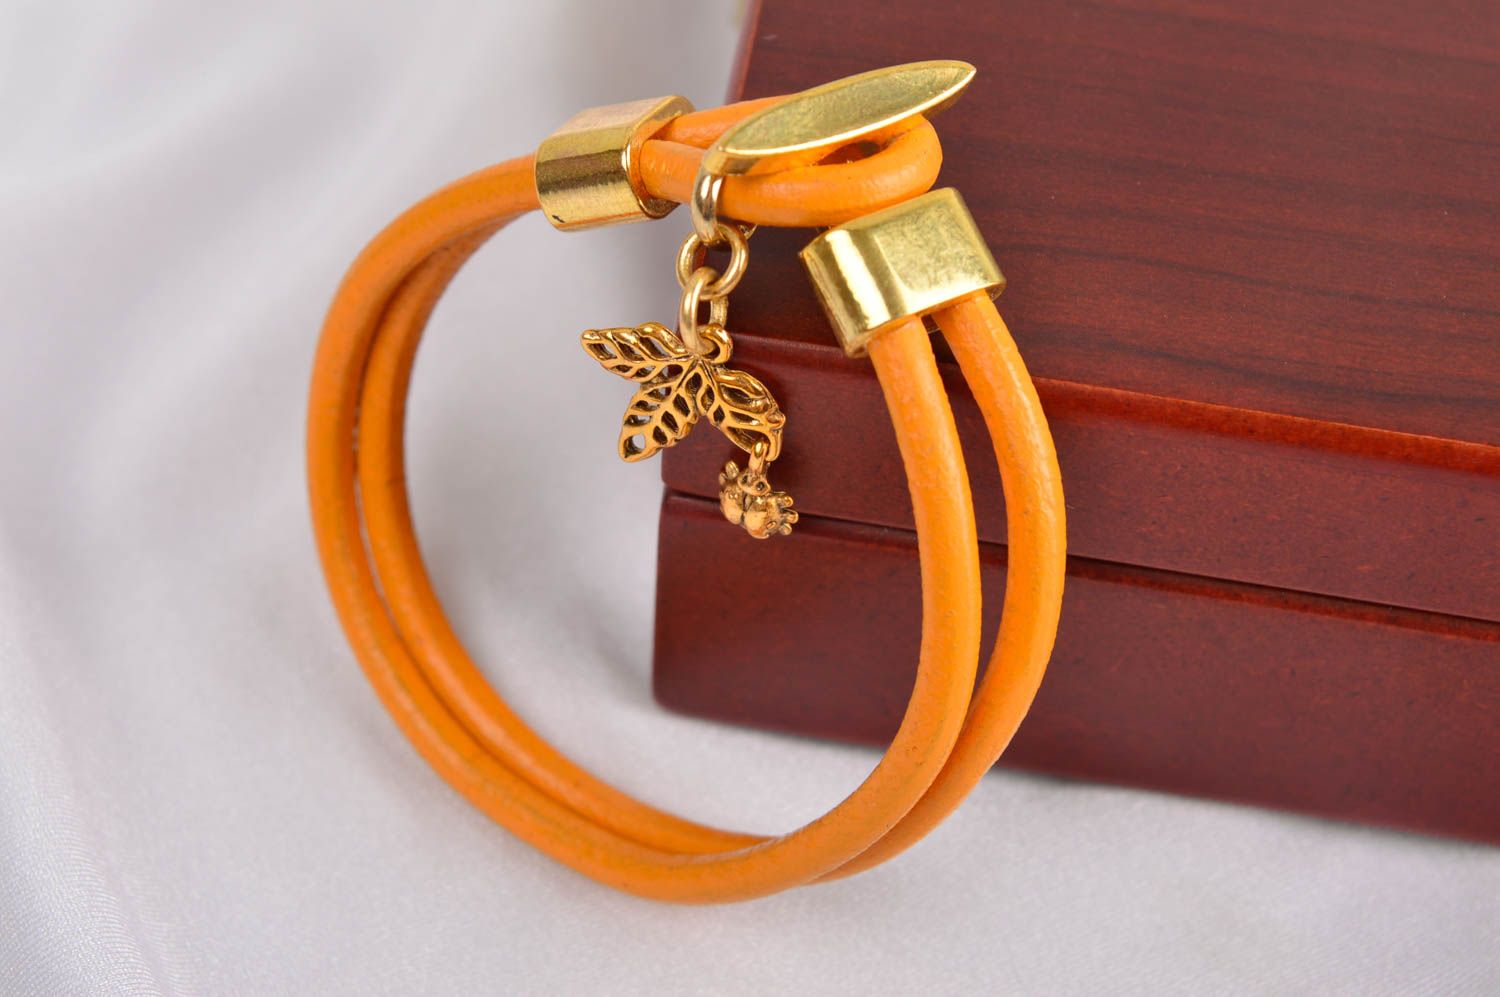 Handmade leather wrist bracelet artisan jewelry designs accessories for girls photo 1